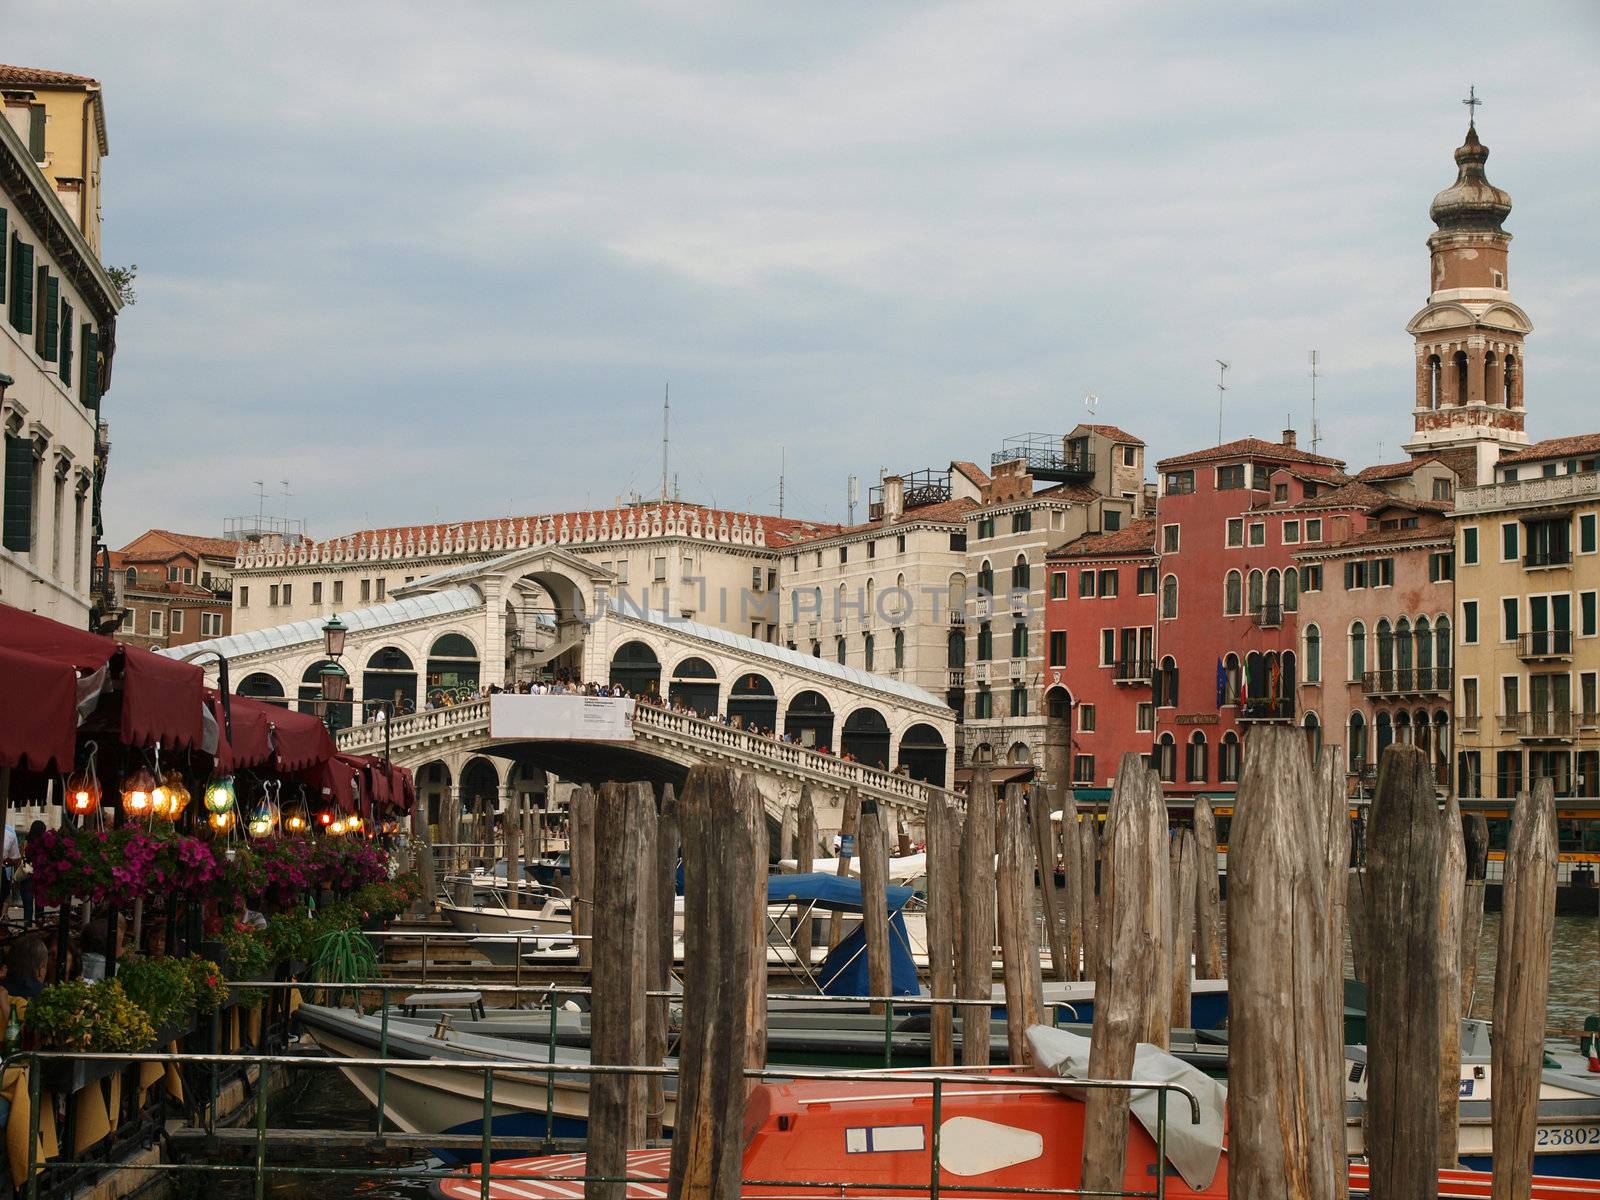 Venice - Parking gondolas nearby Rialto Bridge